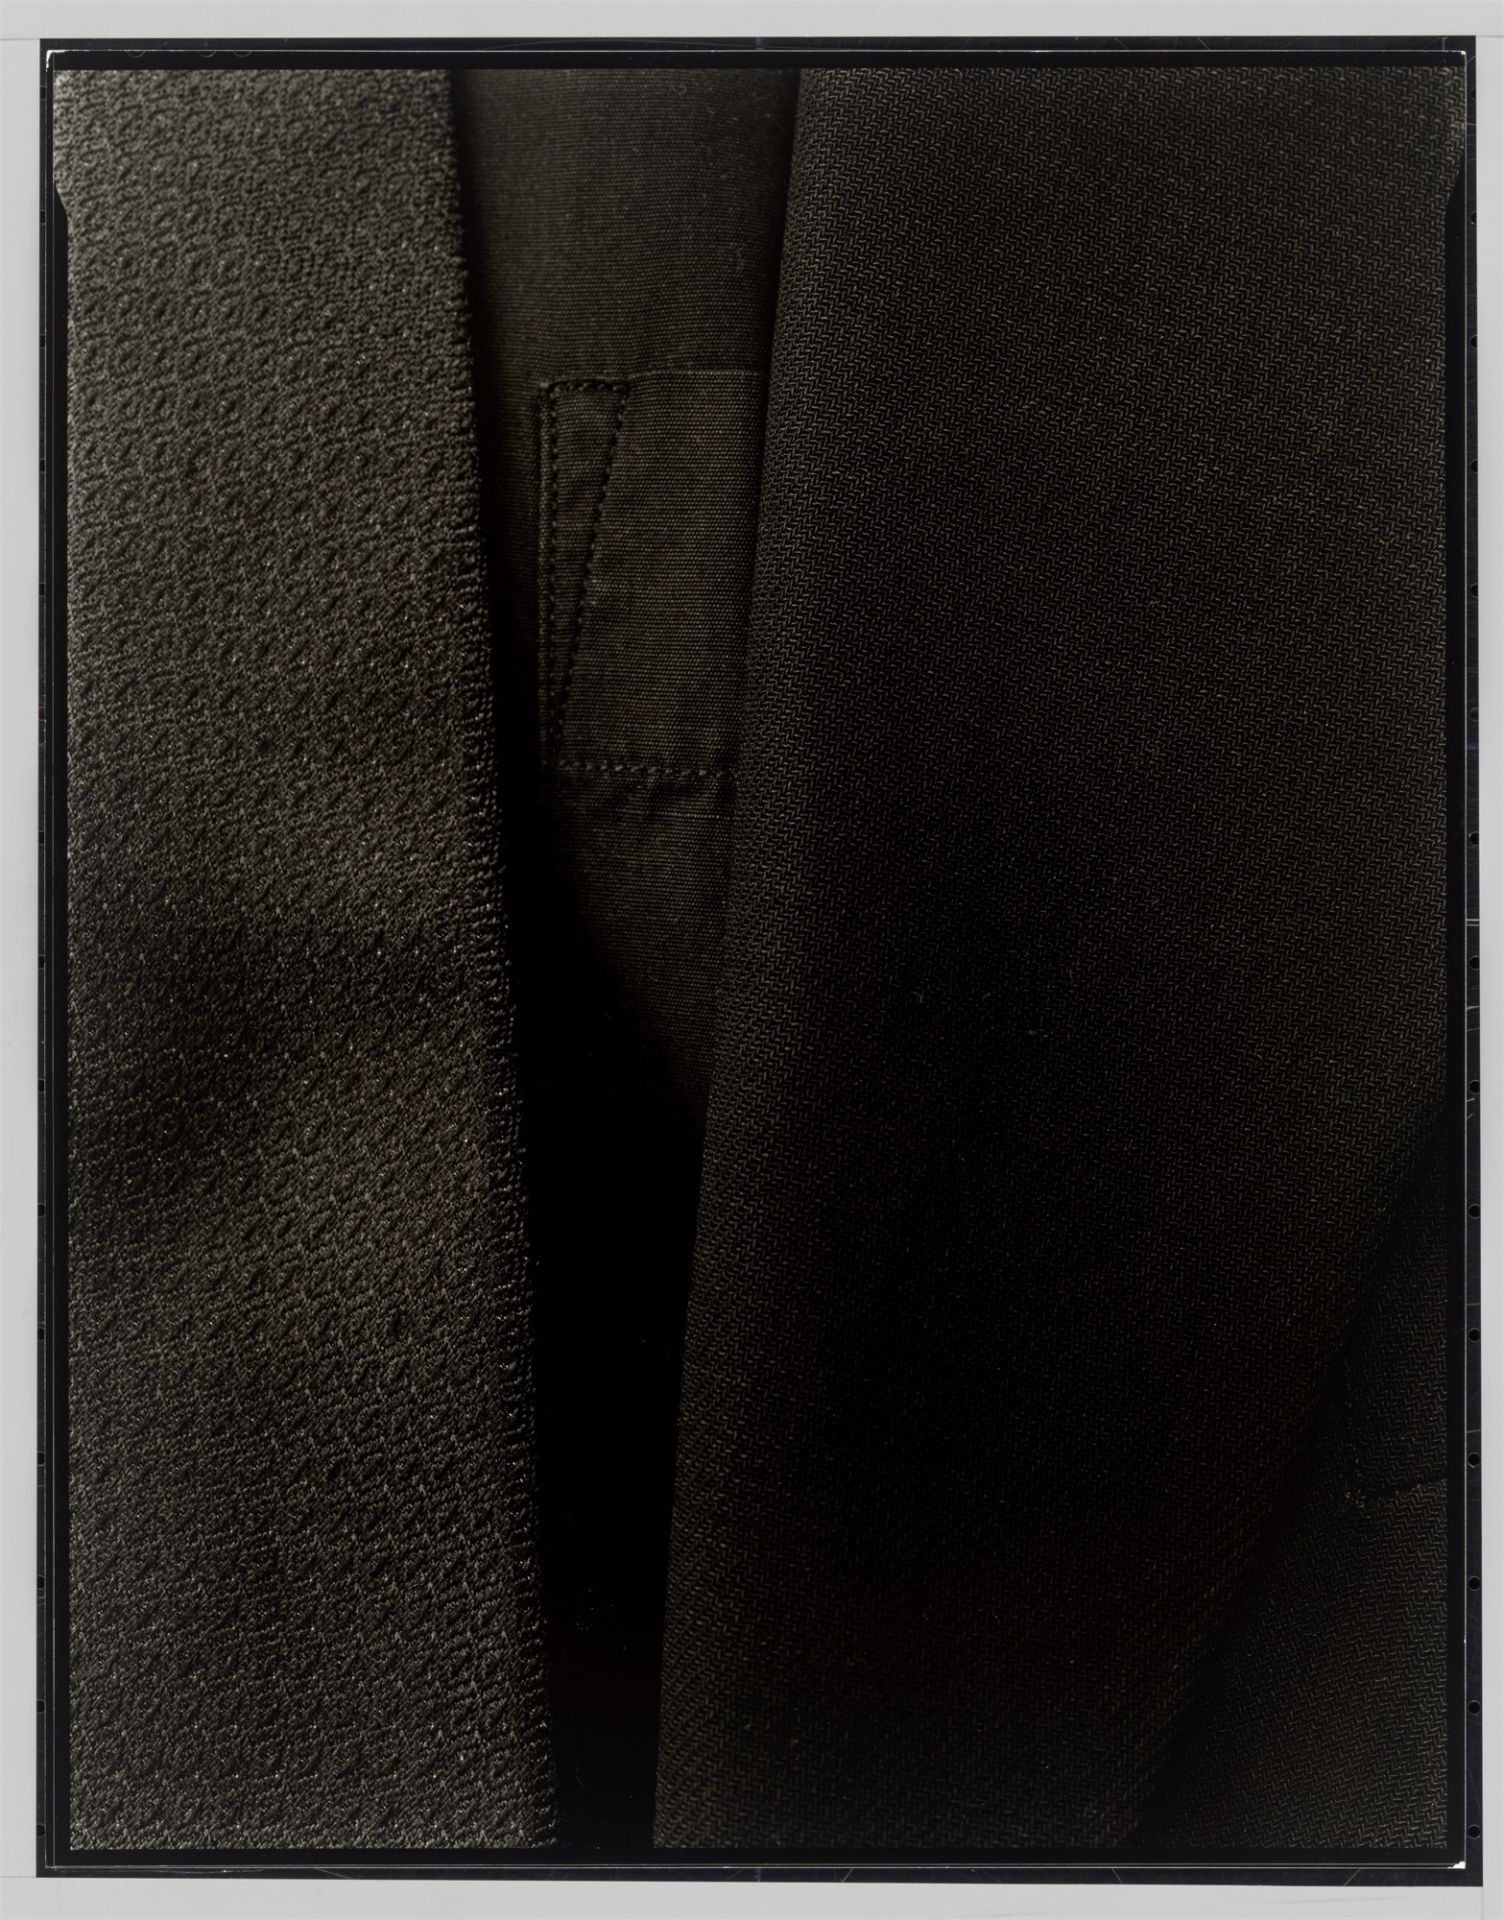 Nicholas Nixon. ”Self. Brookline”. 2009 - Image 2 of 4